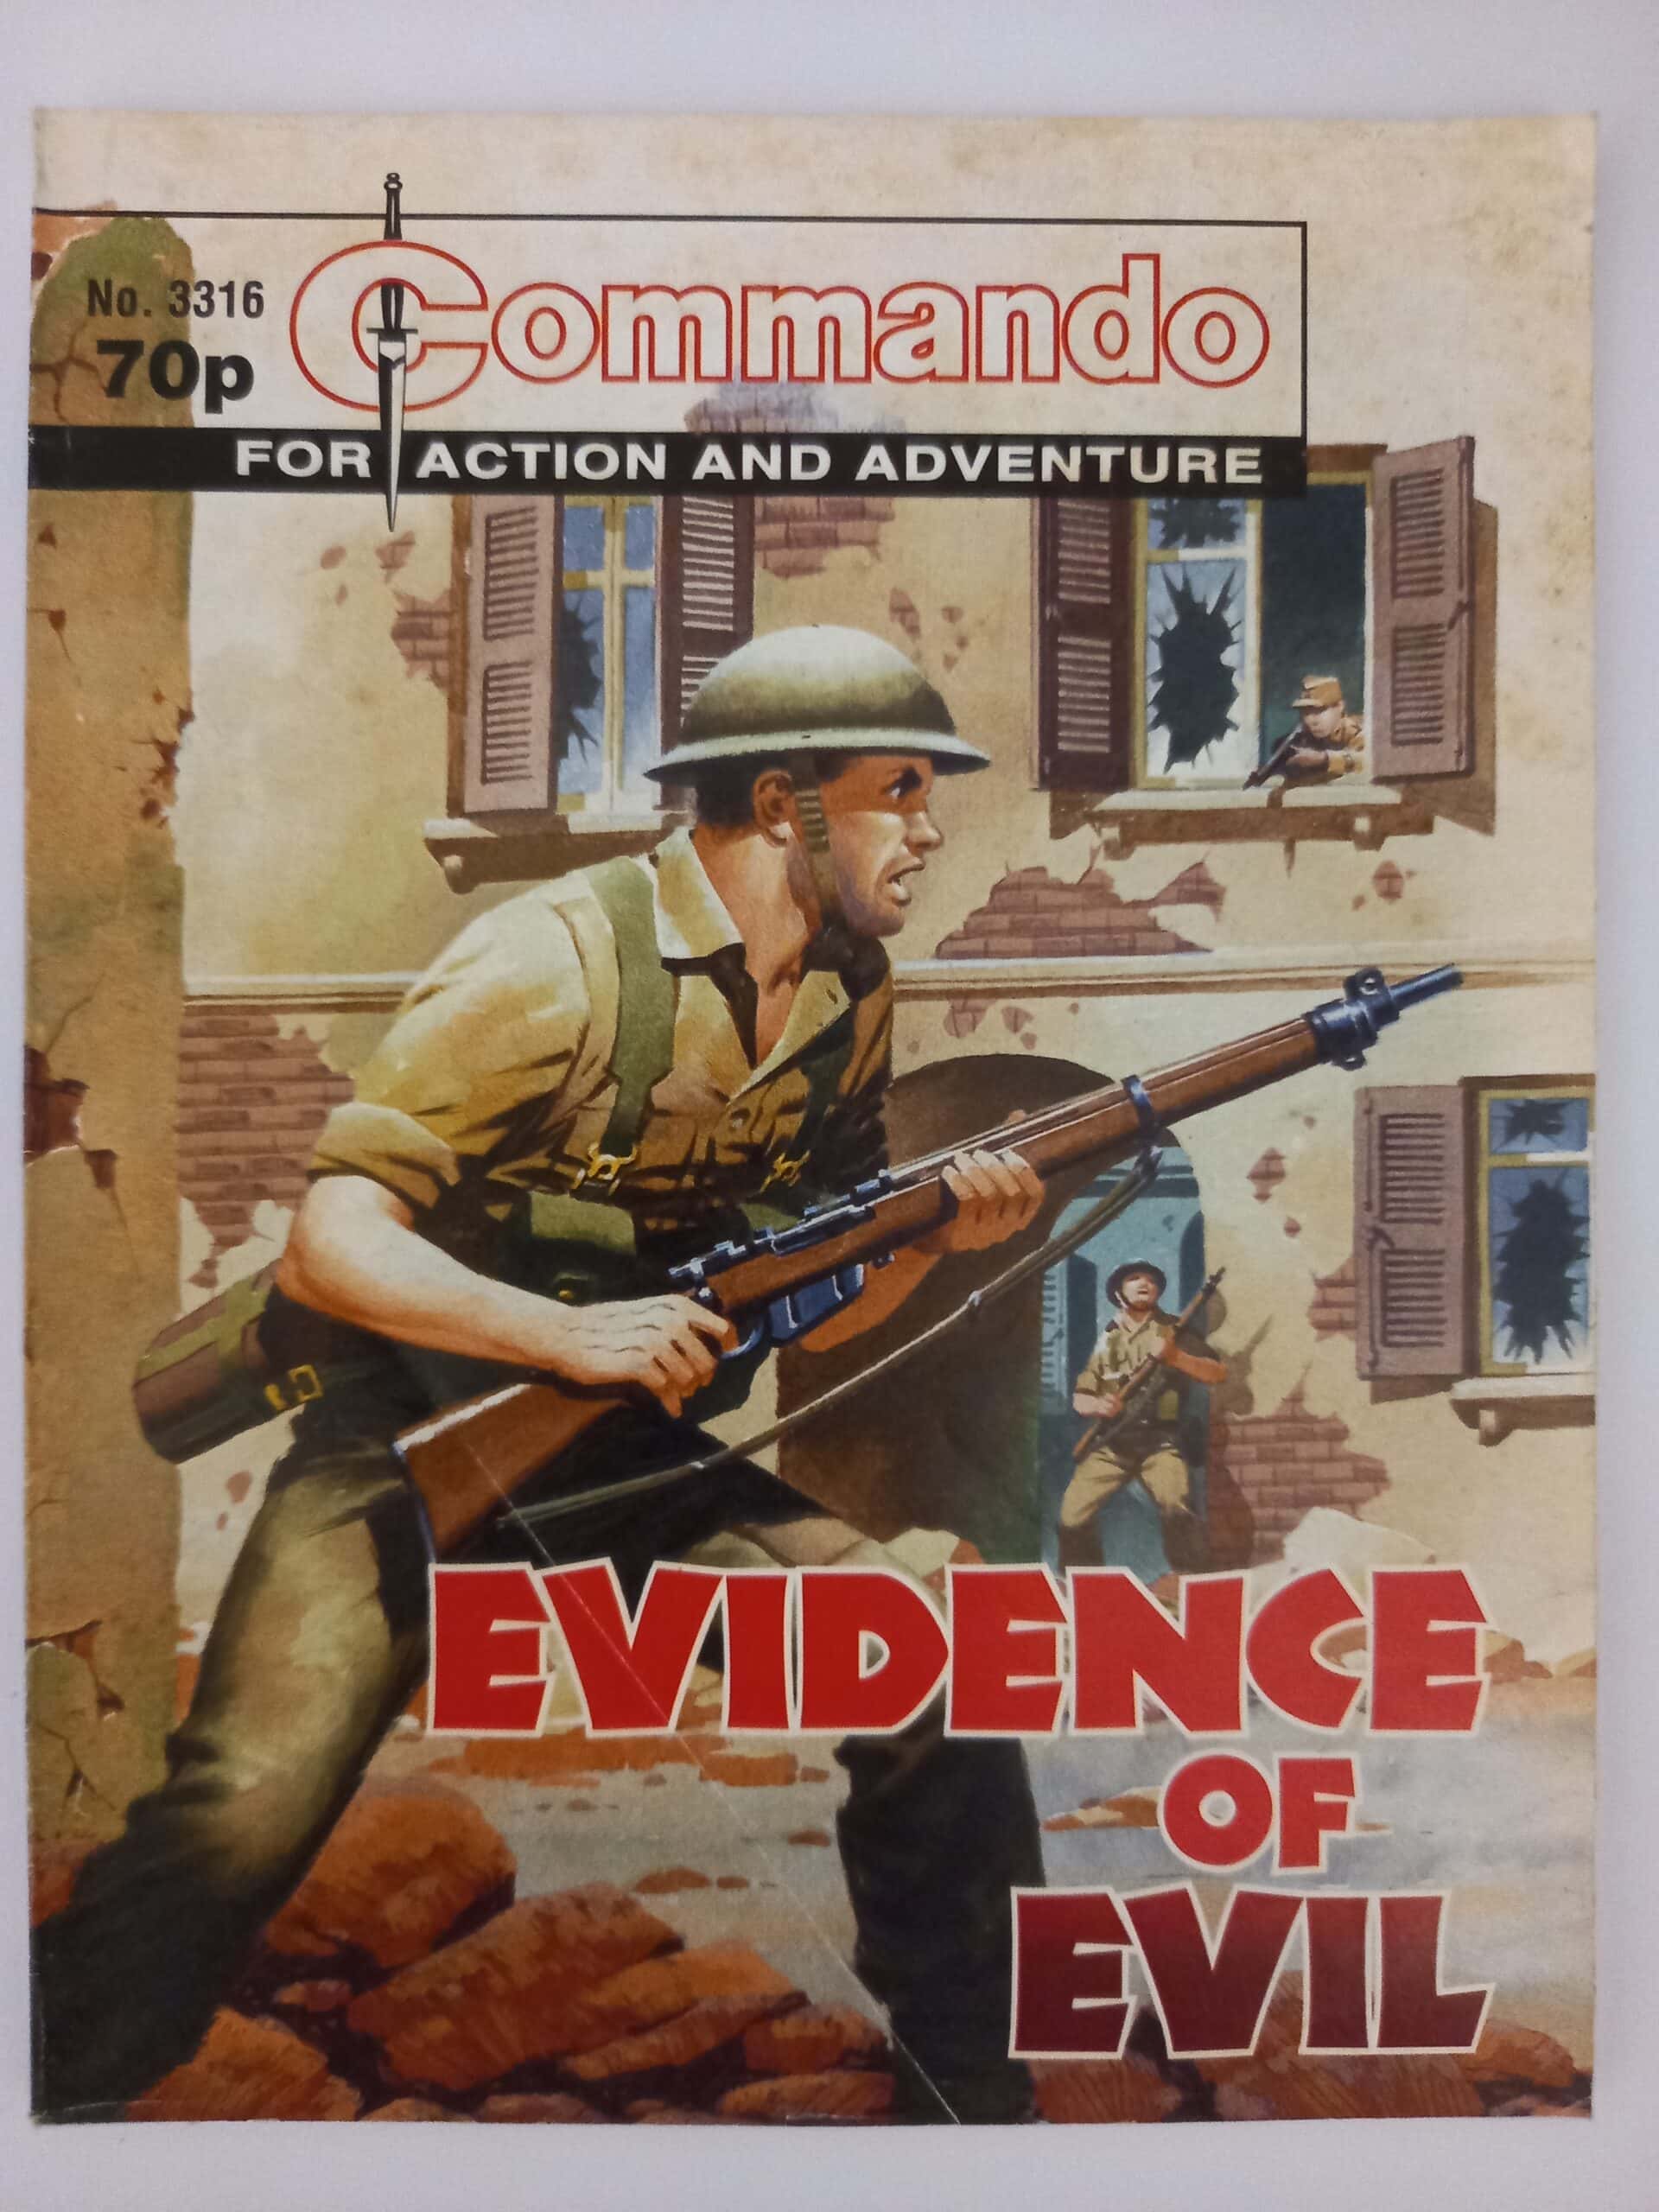 Commando Comic No. 3138 - Death Zone - LetsGoCommando